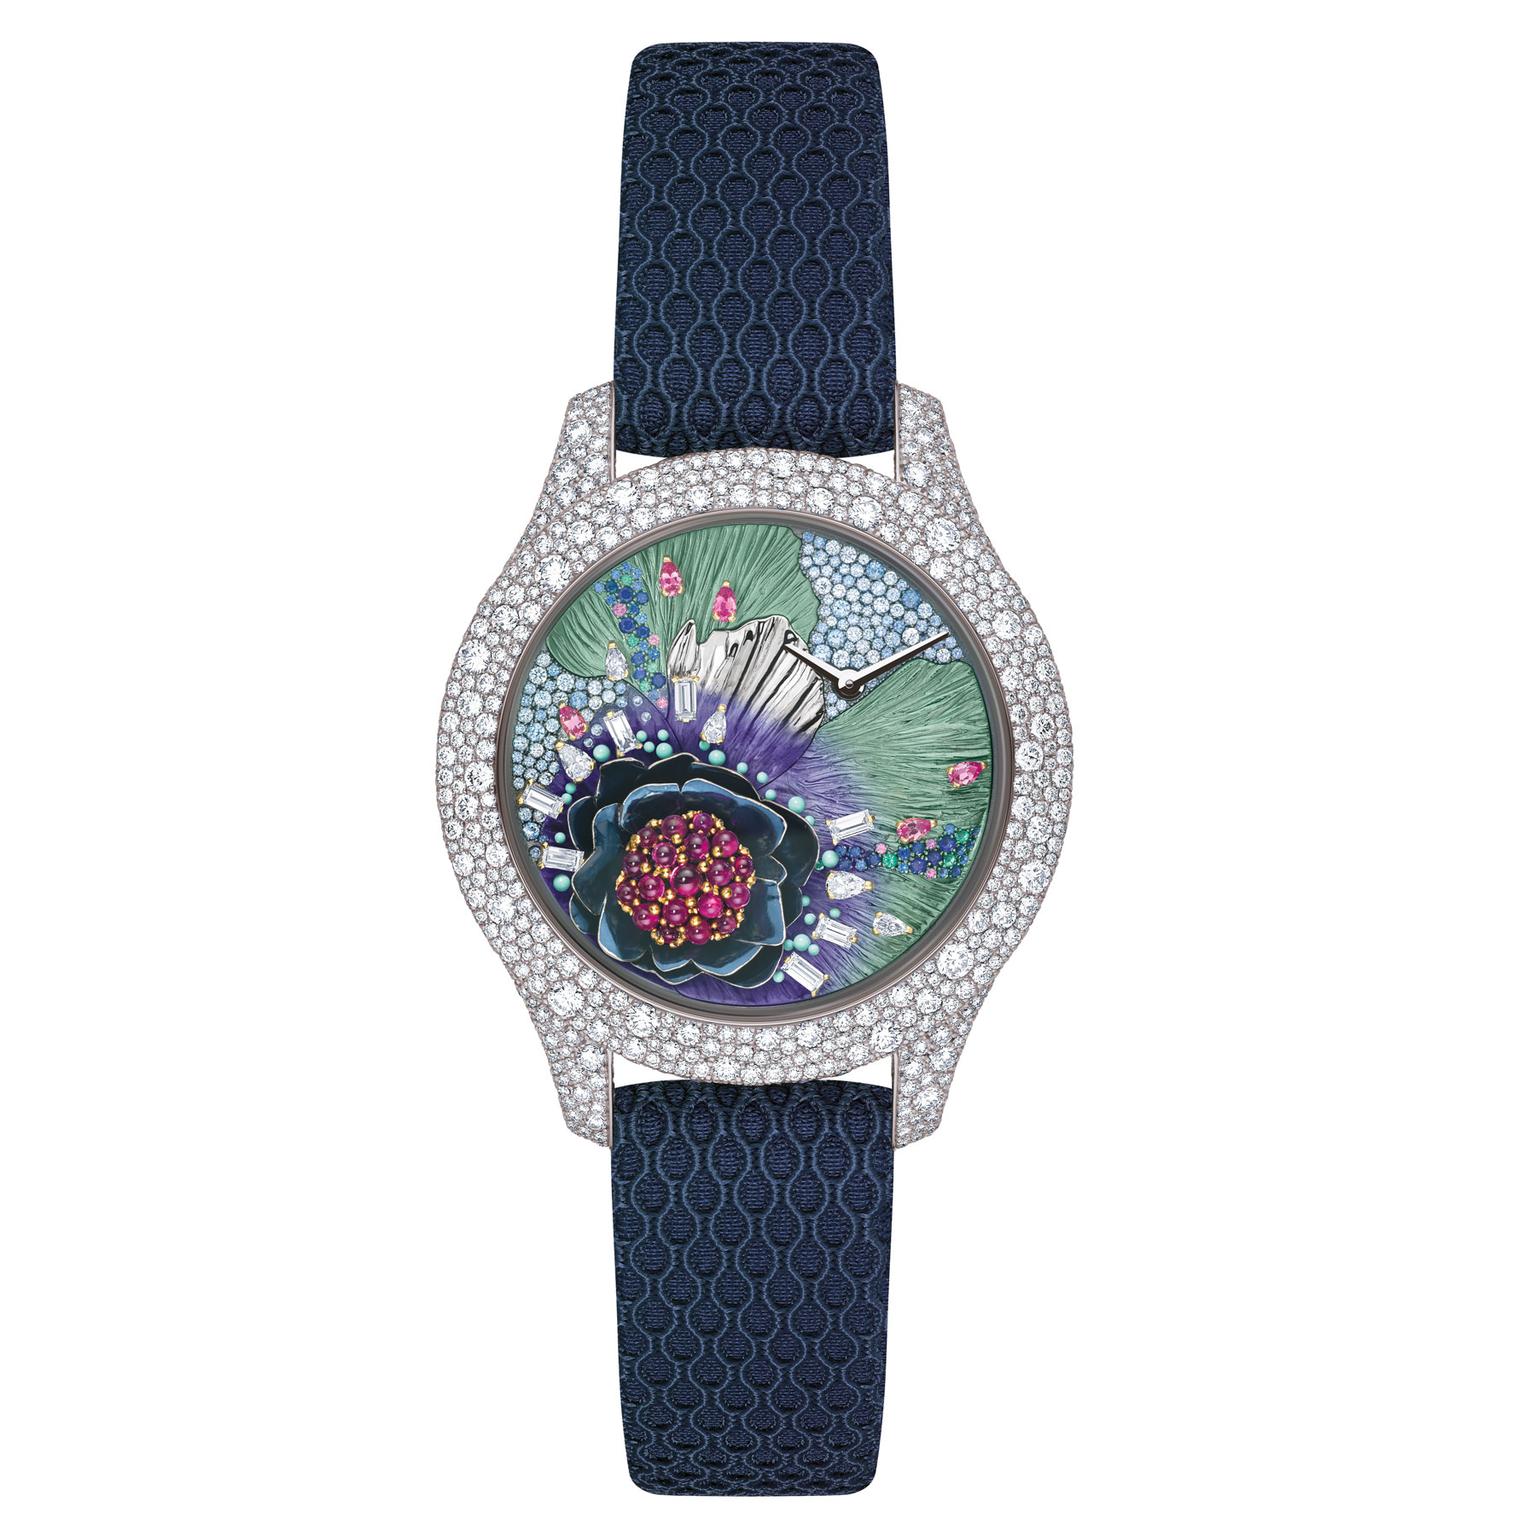 Dior Grand Soir Botanic watch